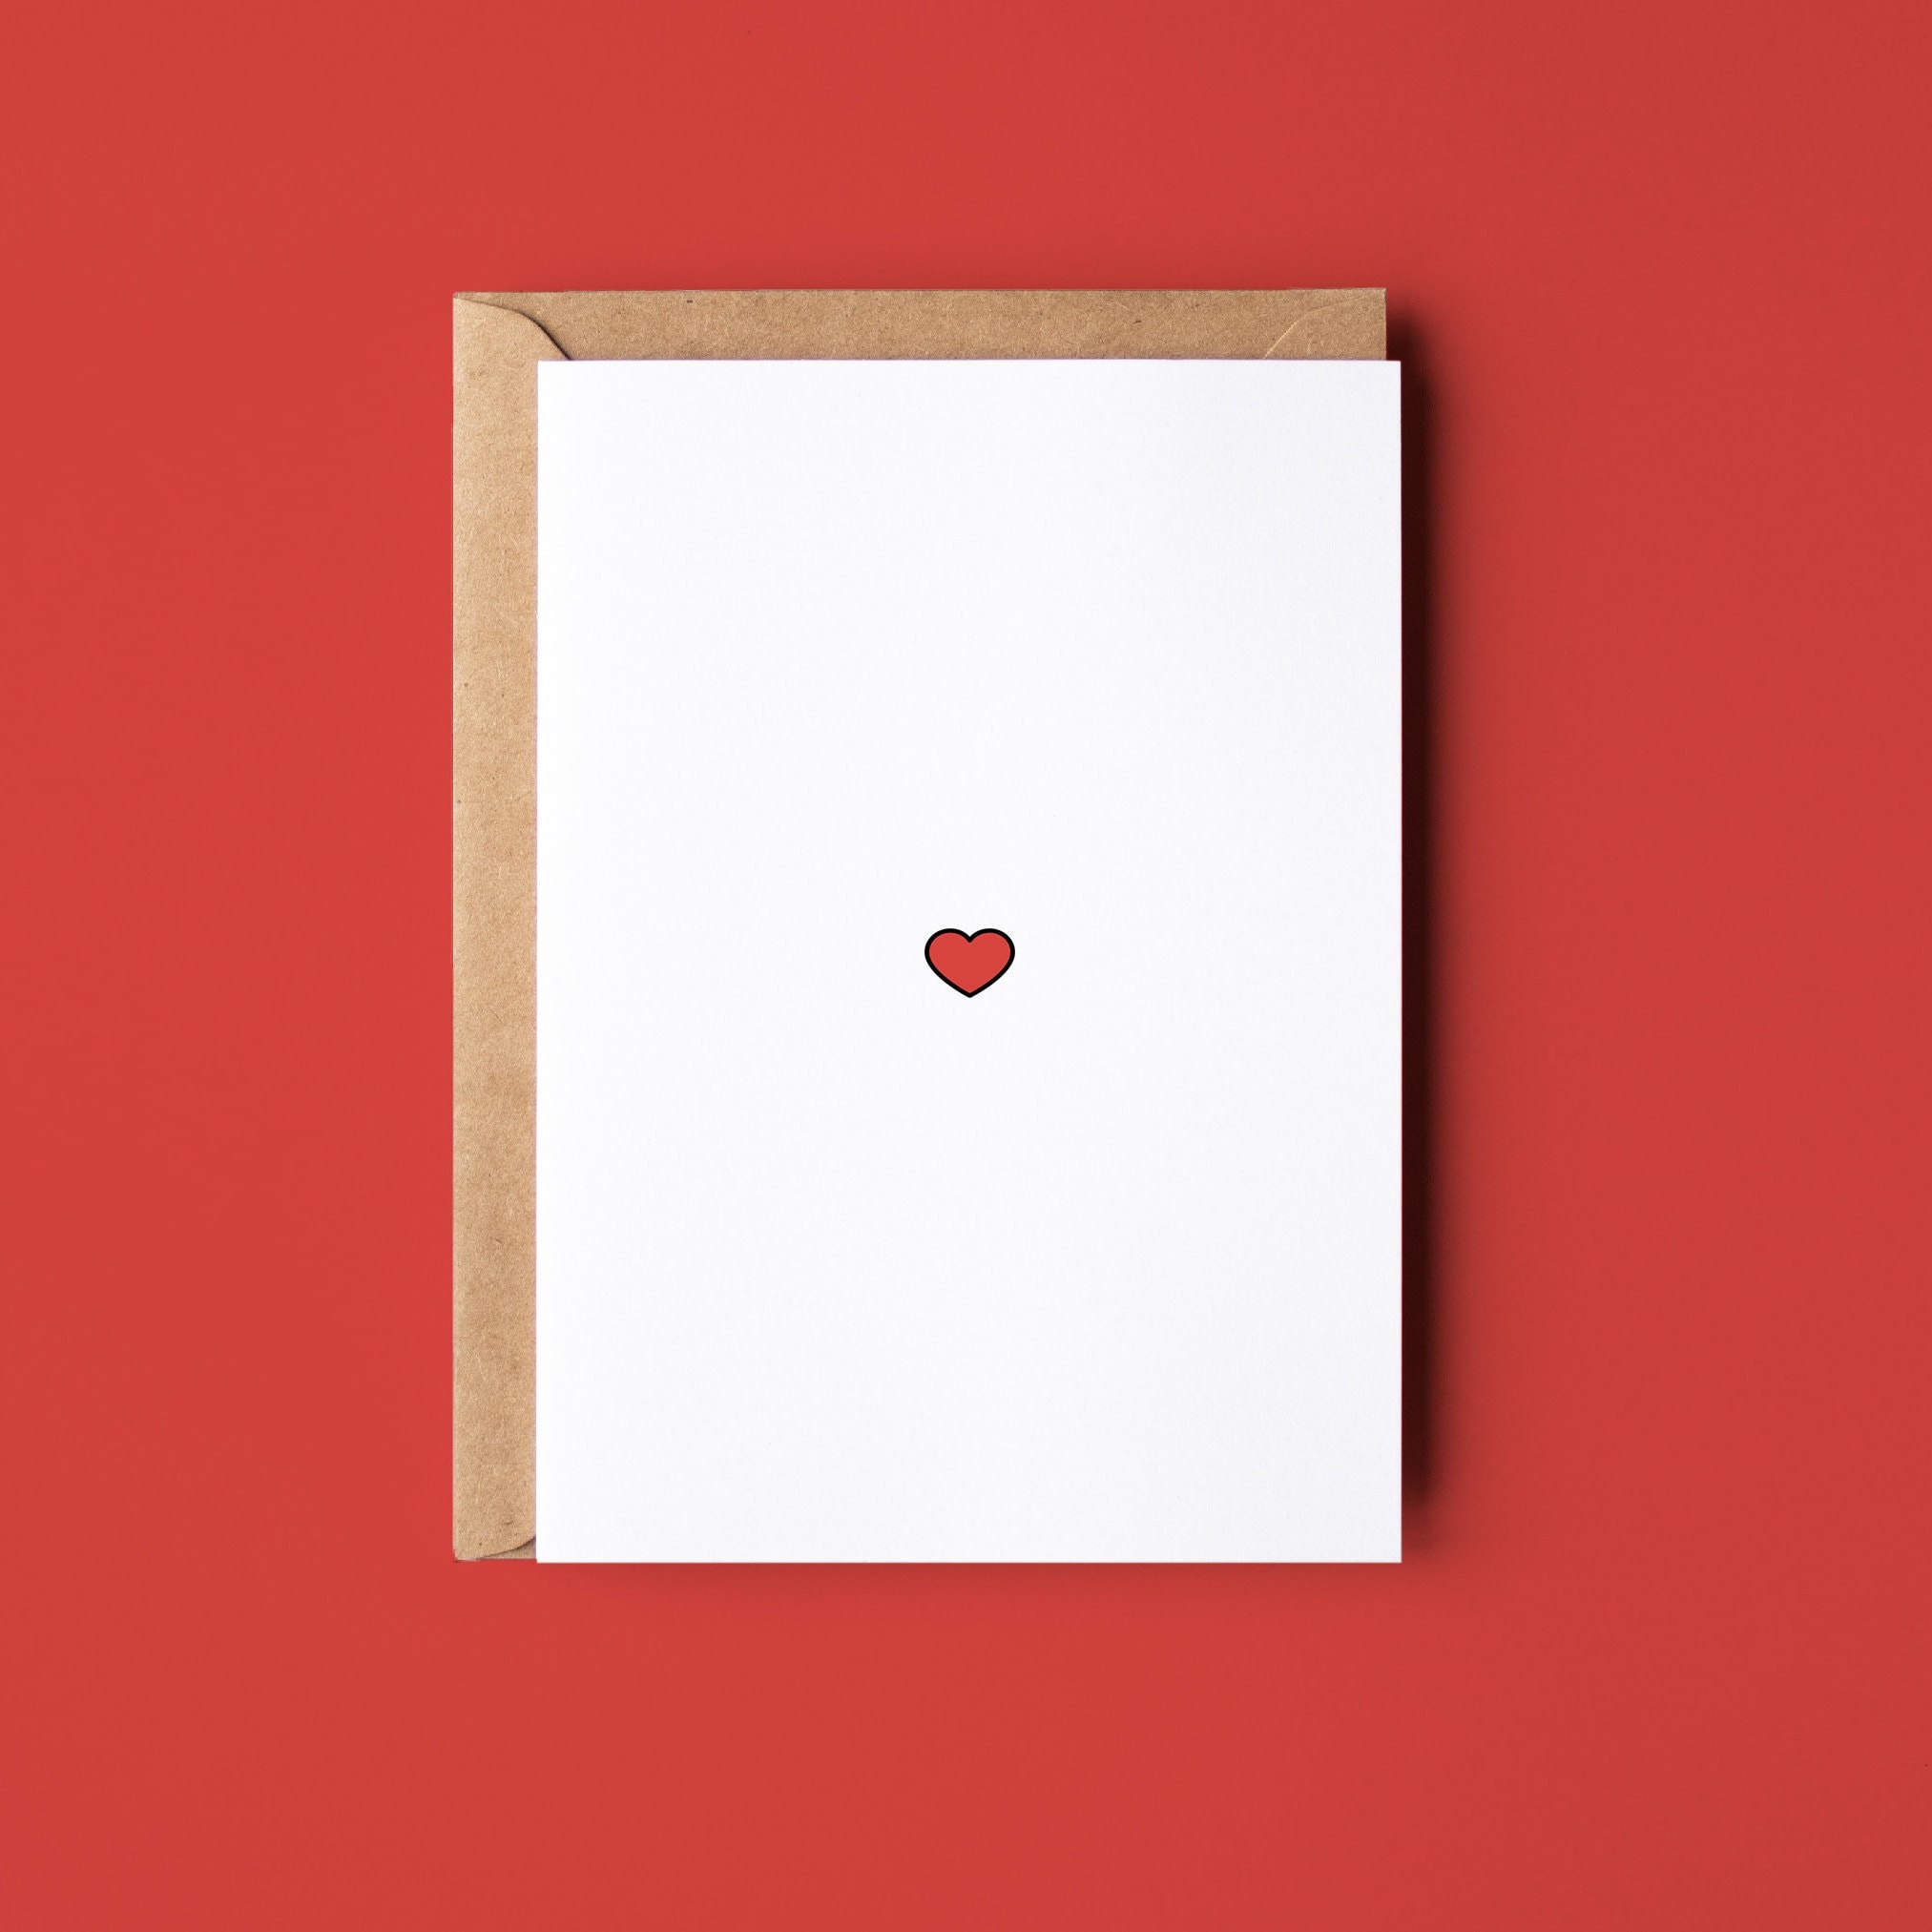 100 Small Paper Hearts, Die Cut Heart, Die Cut Paper Hearts, Heart